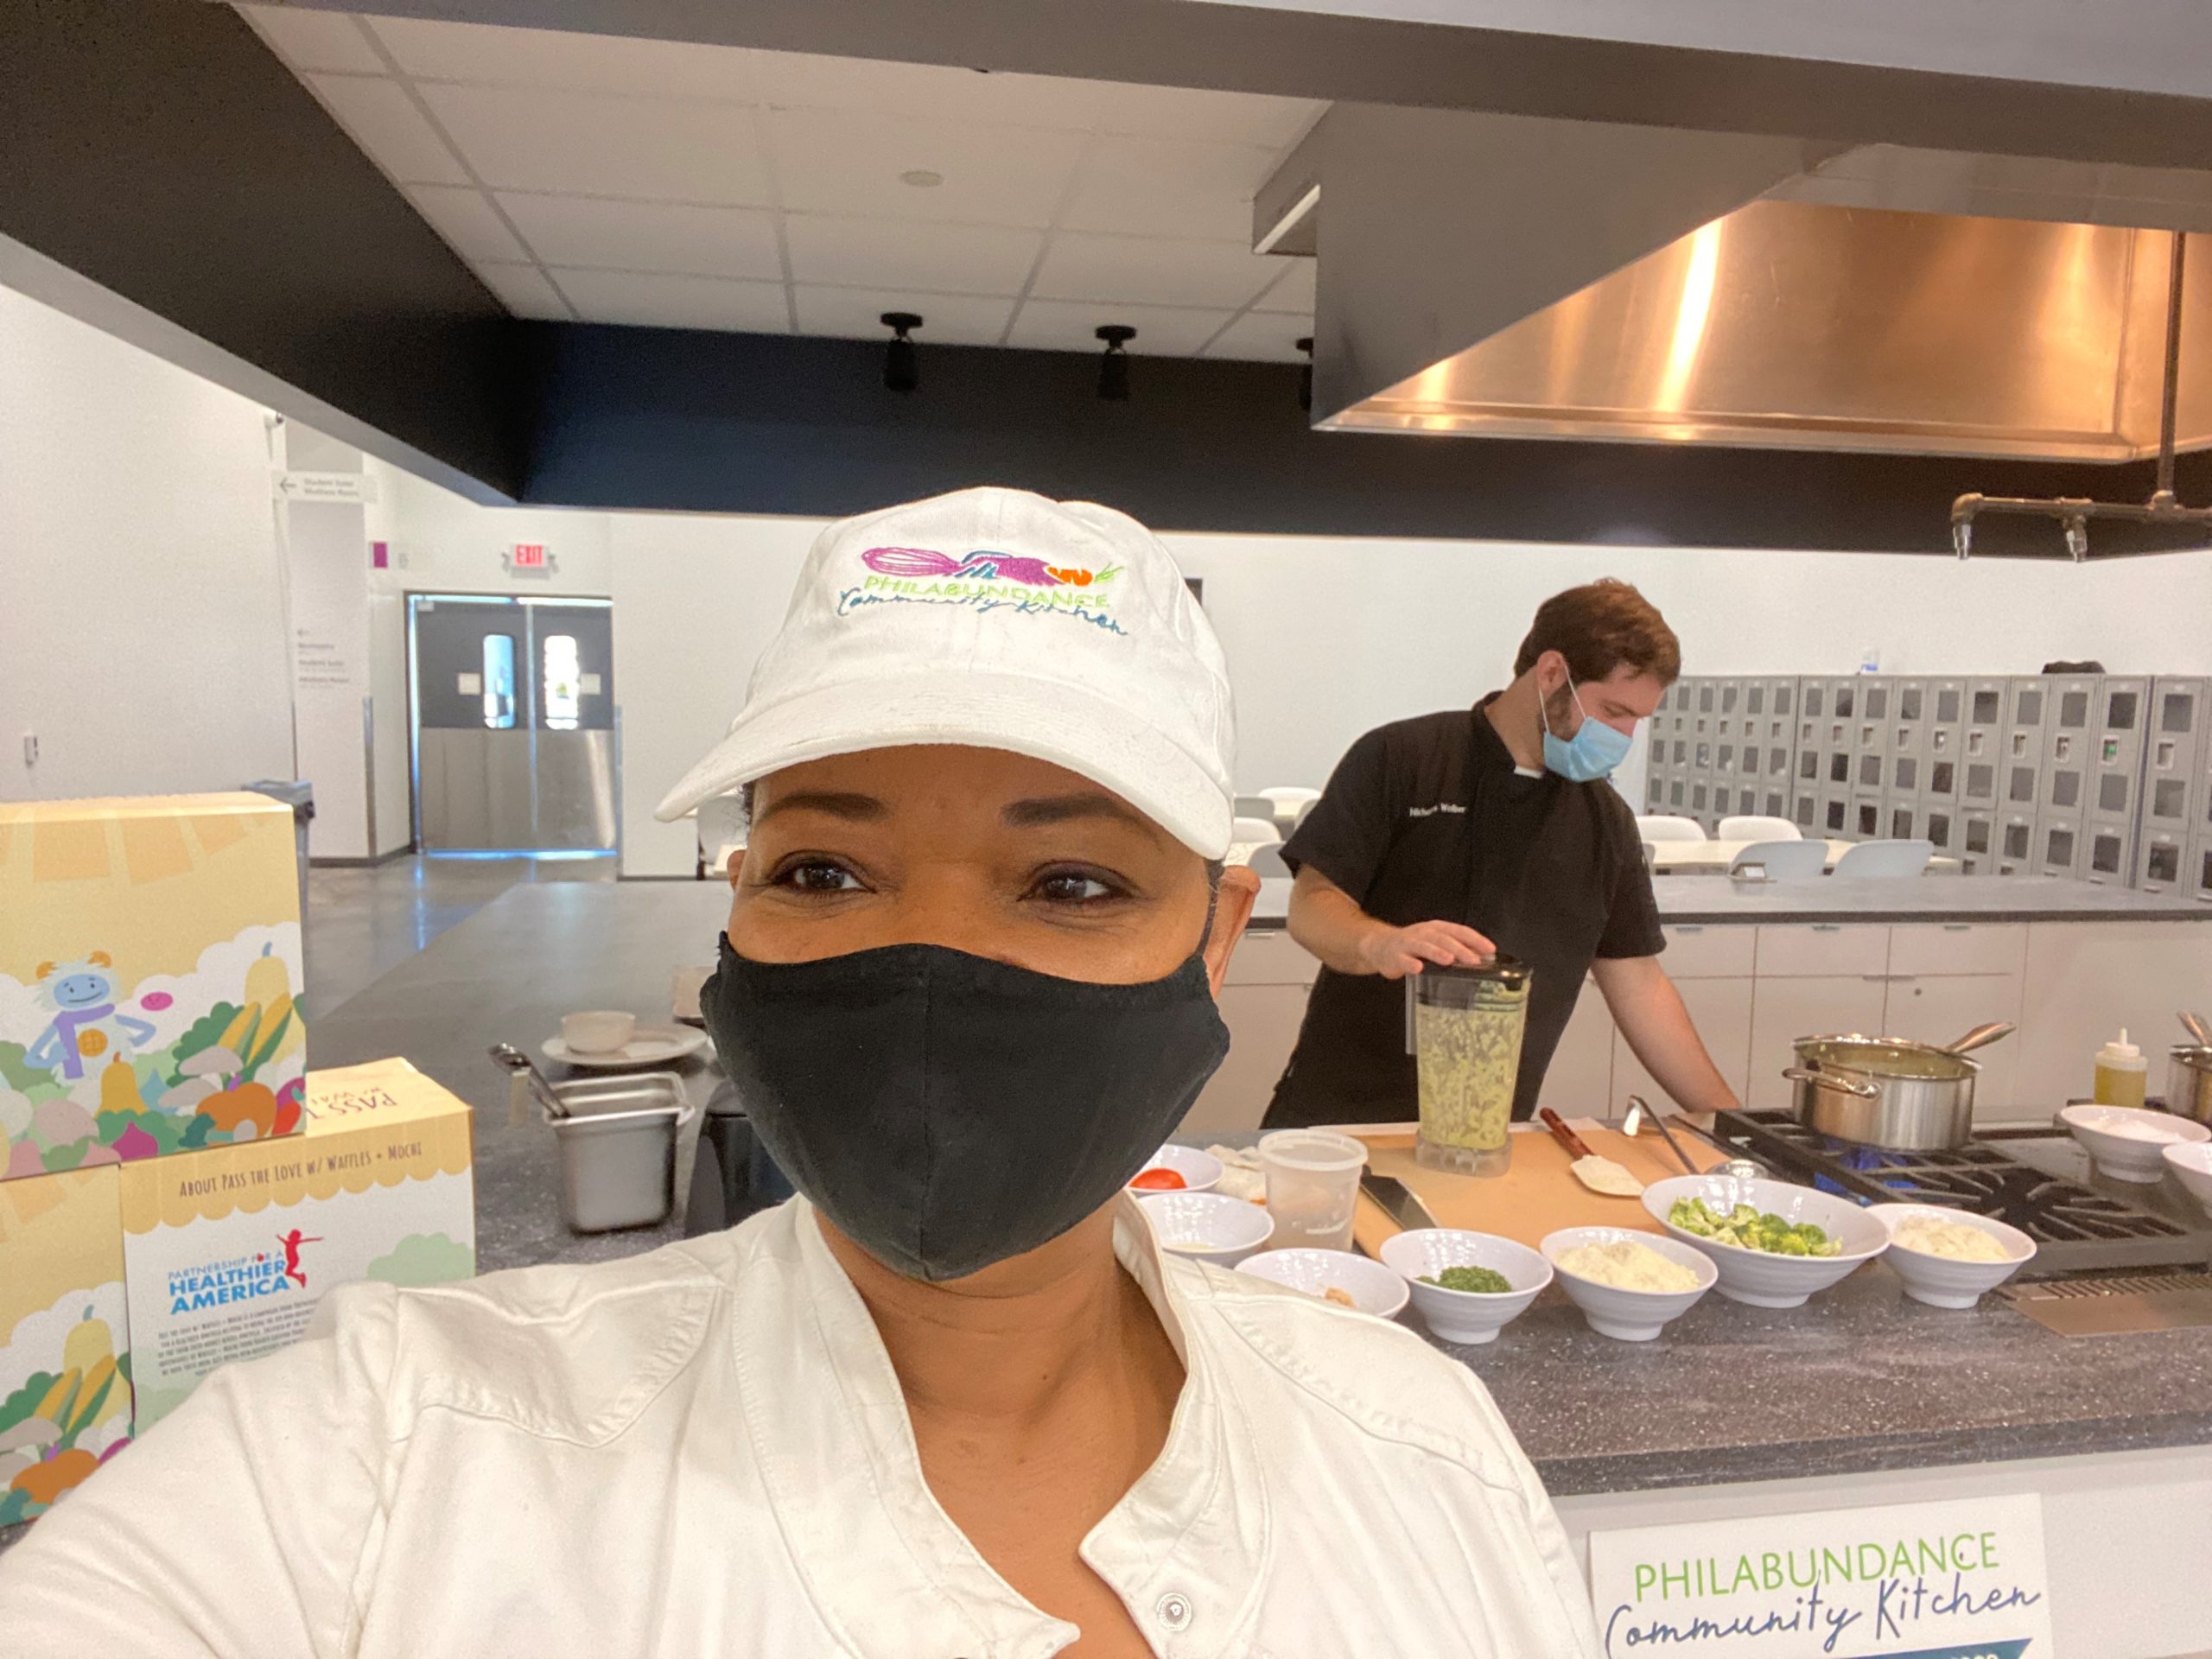 Loree Jones selfie in community kitchen